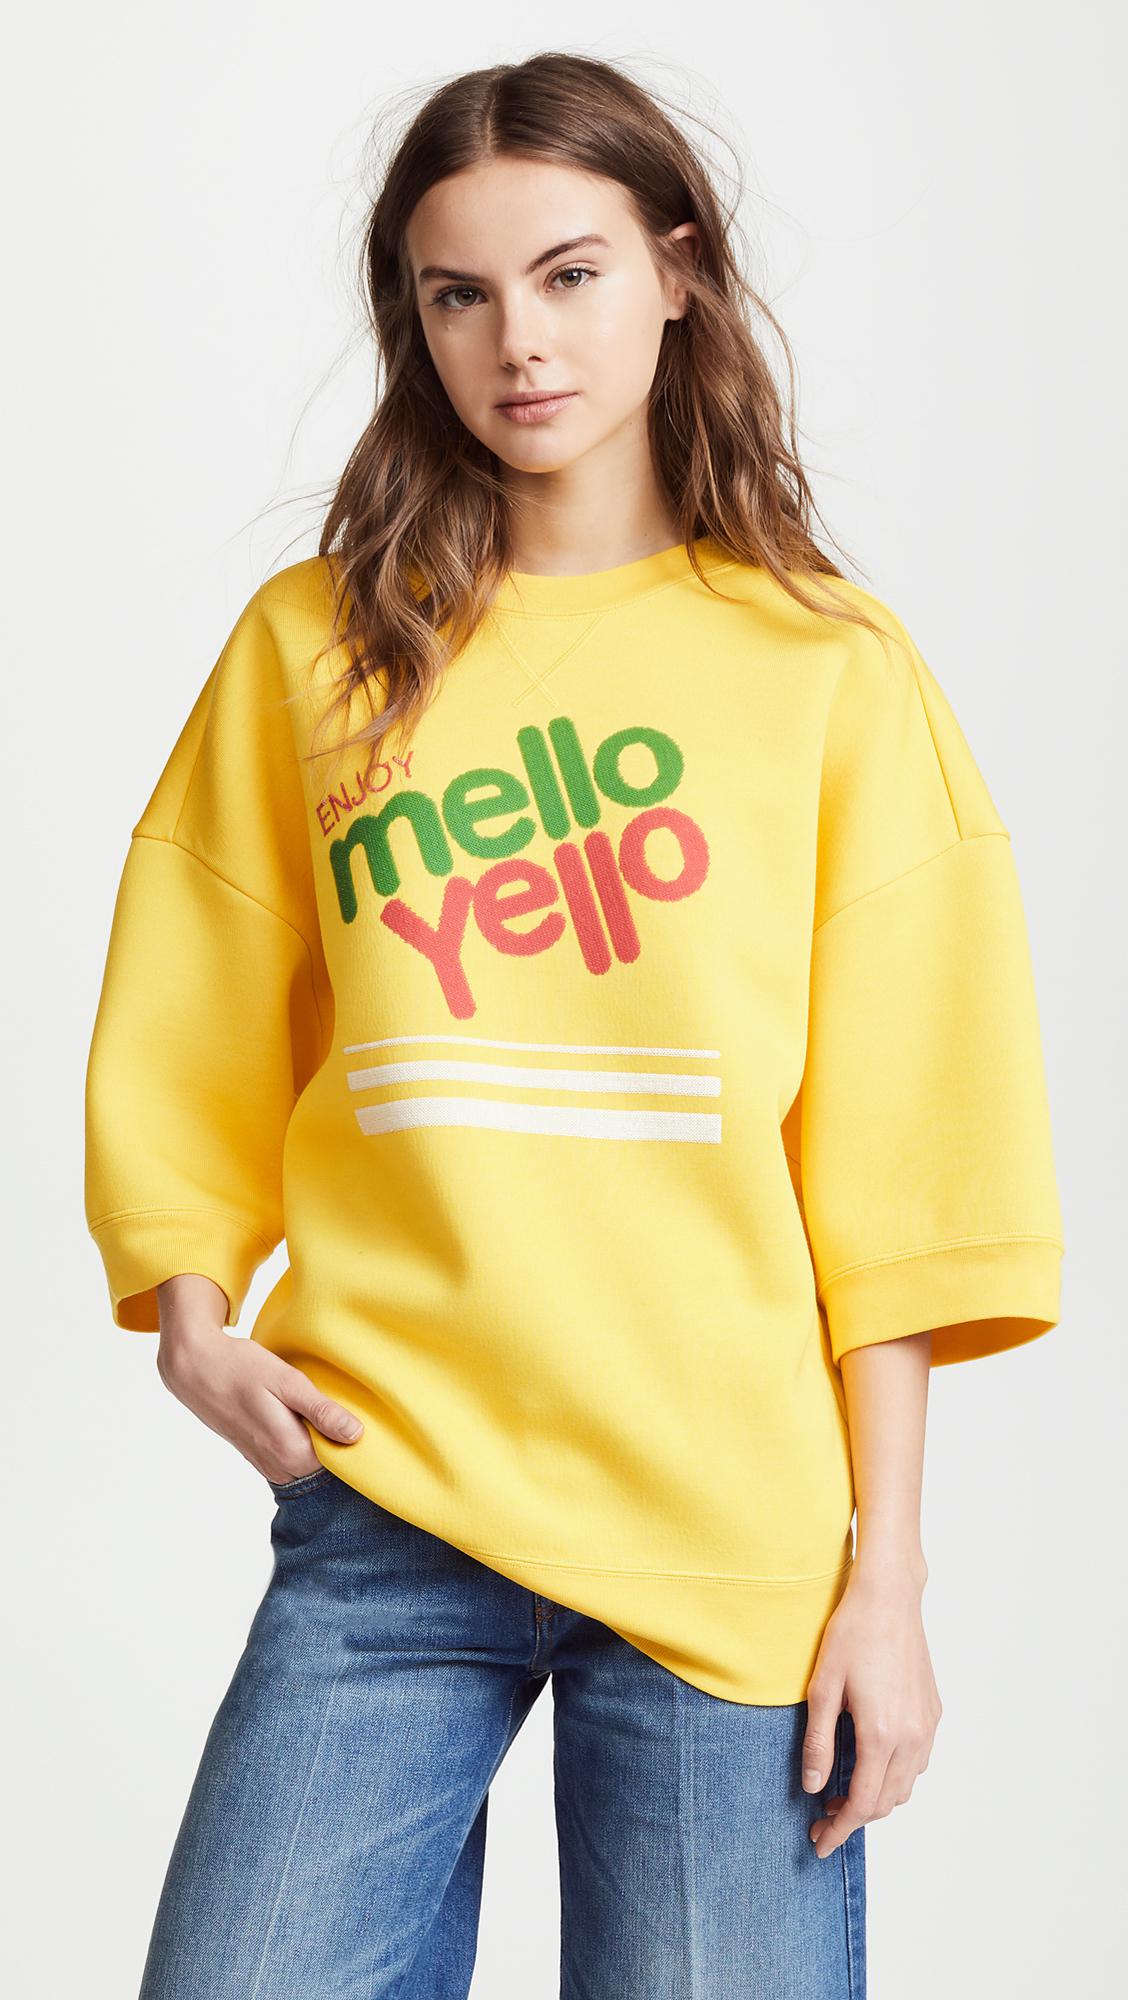 Marc Jacobs Mello Yello Sweatshirt With Short Sleeves & Crew Neckline in  Yellow | Lyst